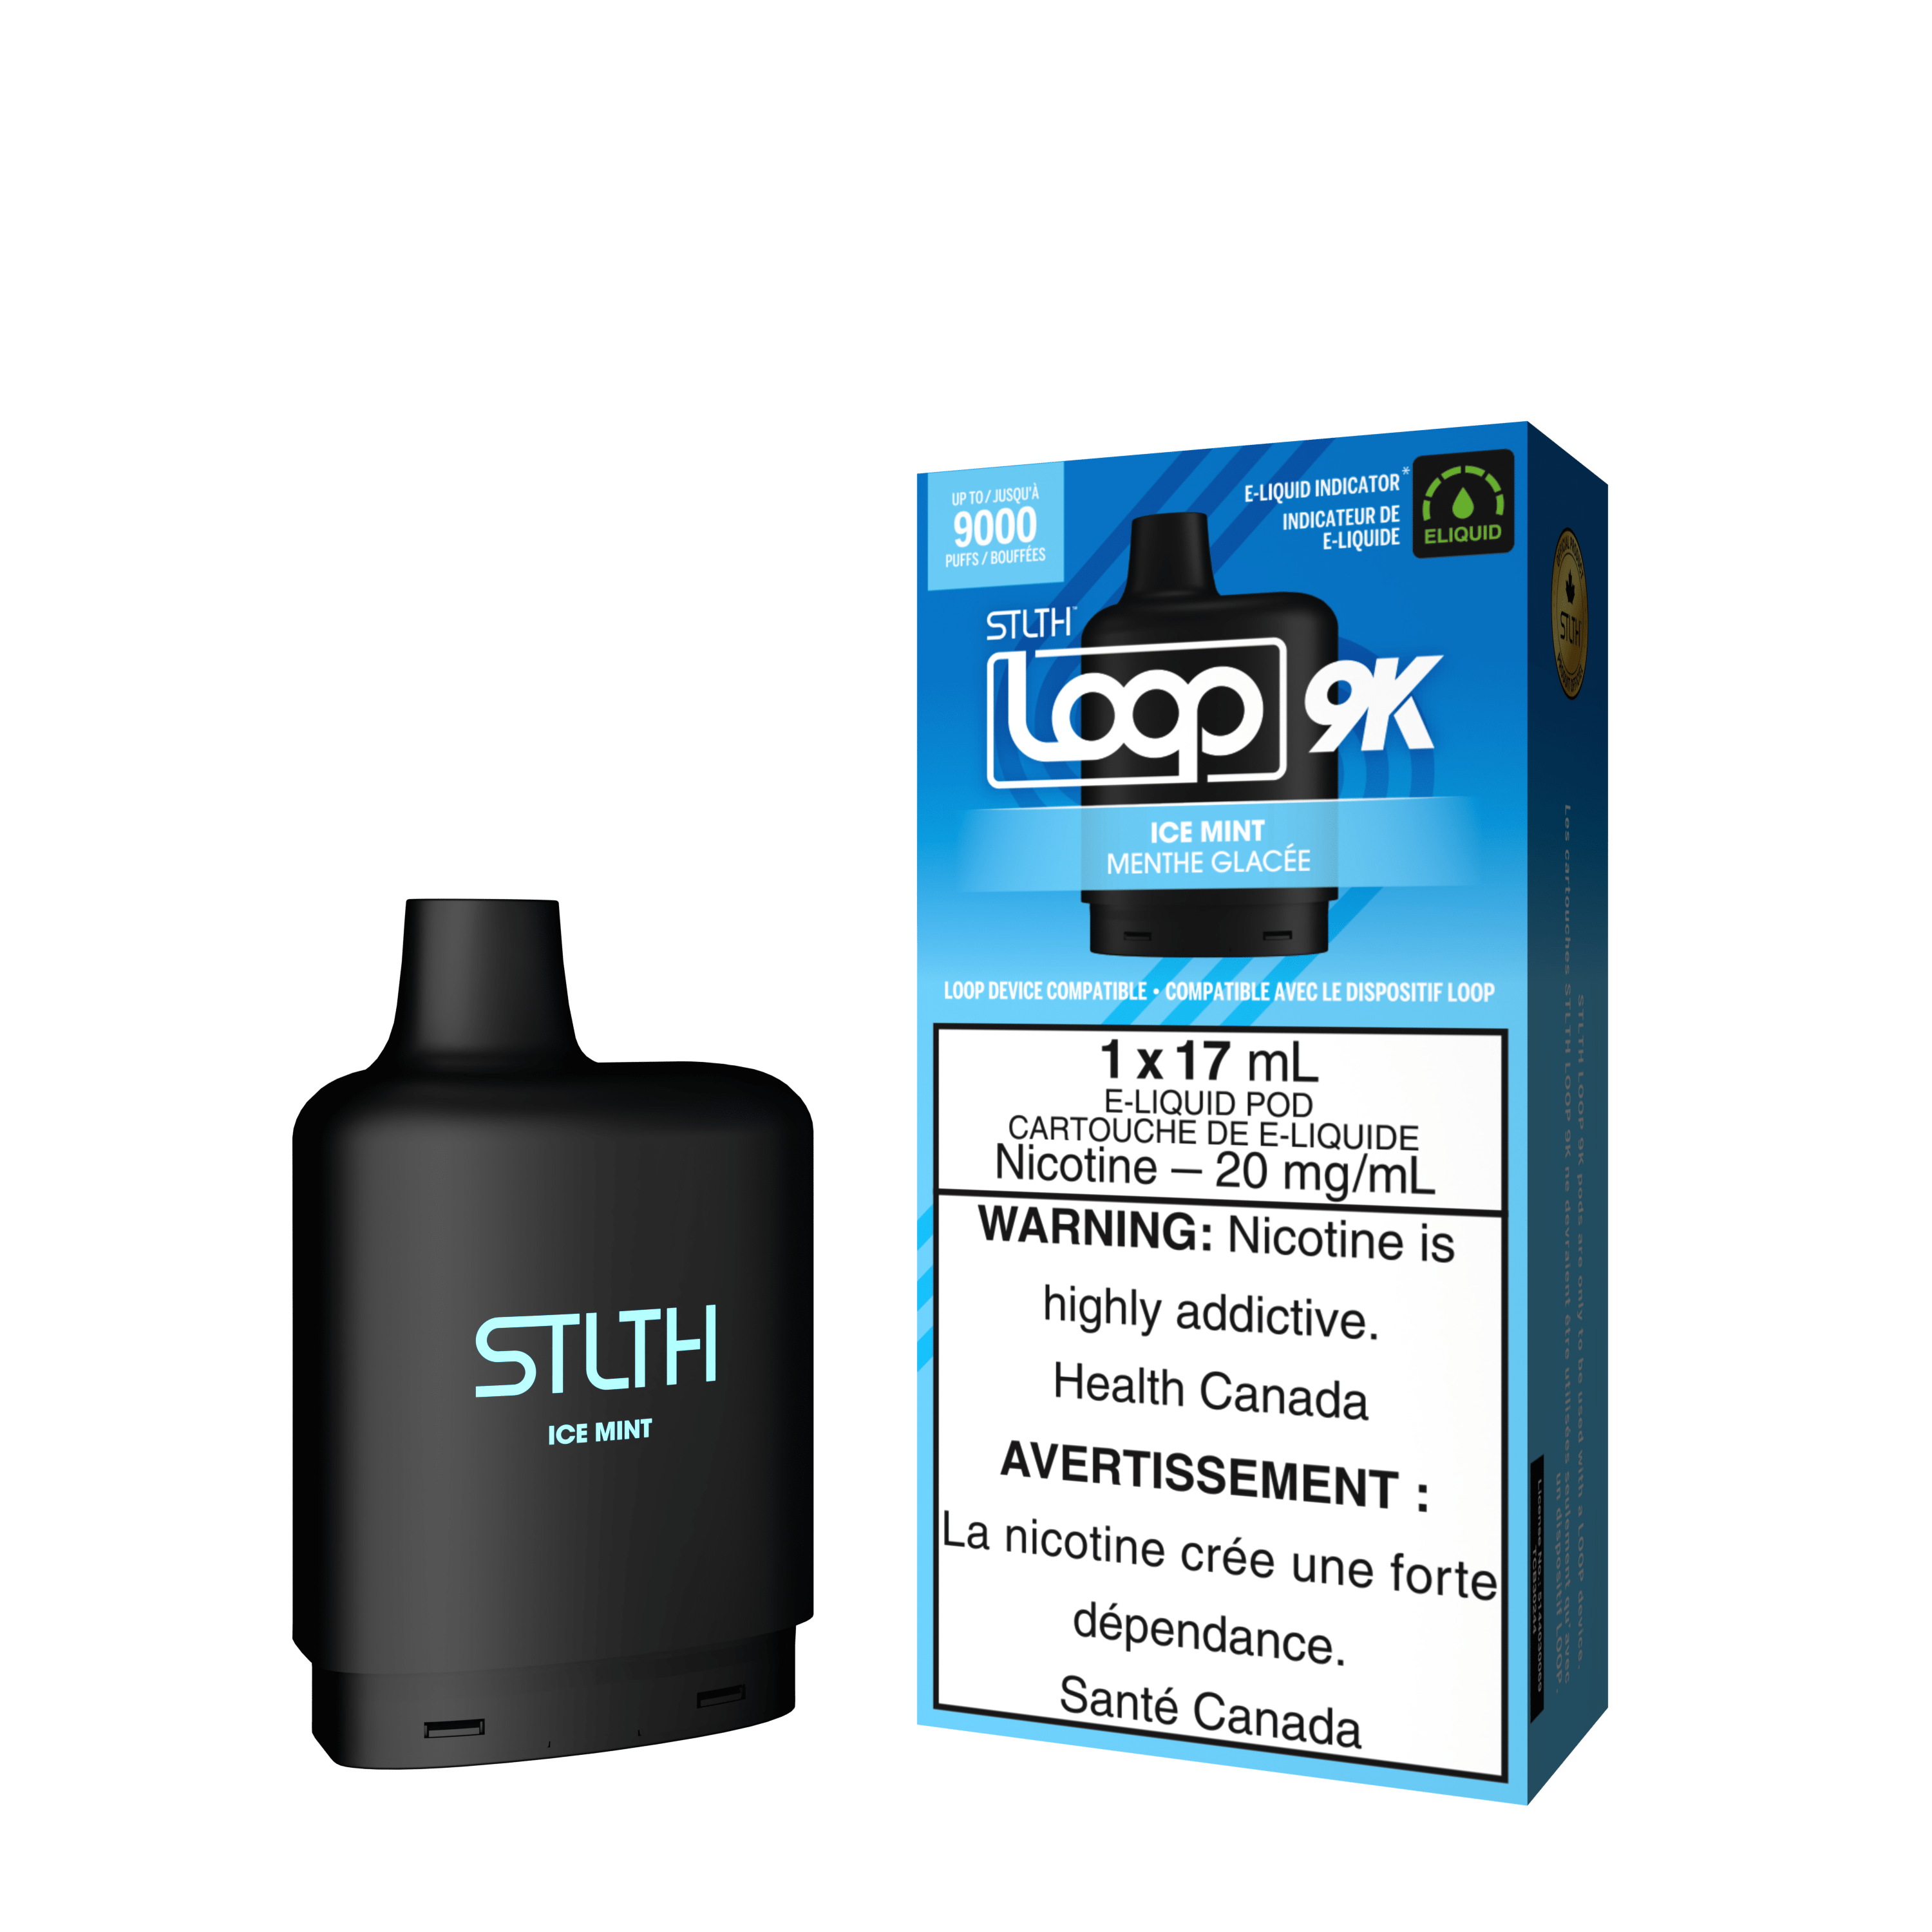 STLTH Loop 9K Pod - Ice Mint available on Canada online vape shop